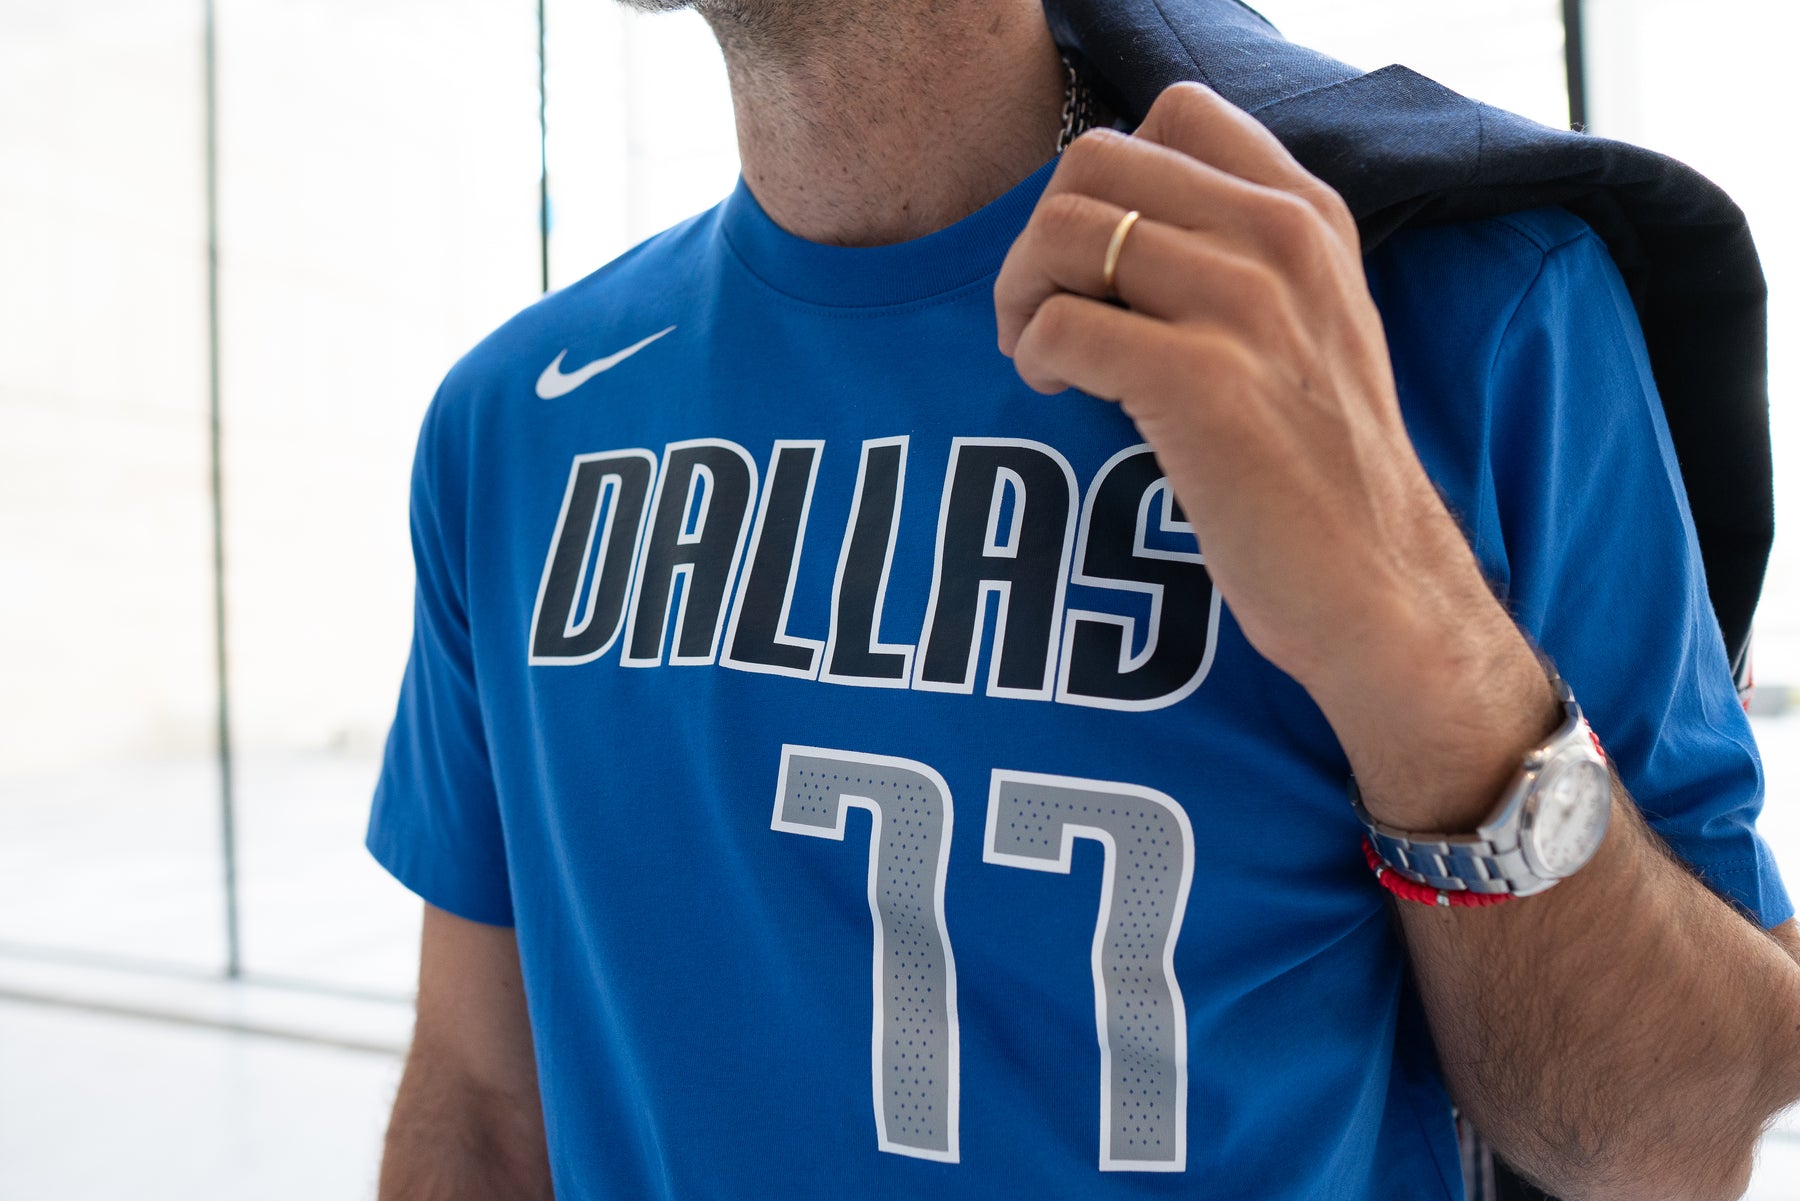 Outerstuff Dallas Mavericks Youth Nike Luka Dončić Royal Name & Number Hoodie L / Royal